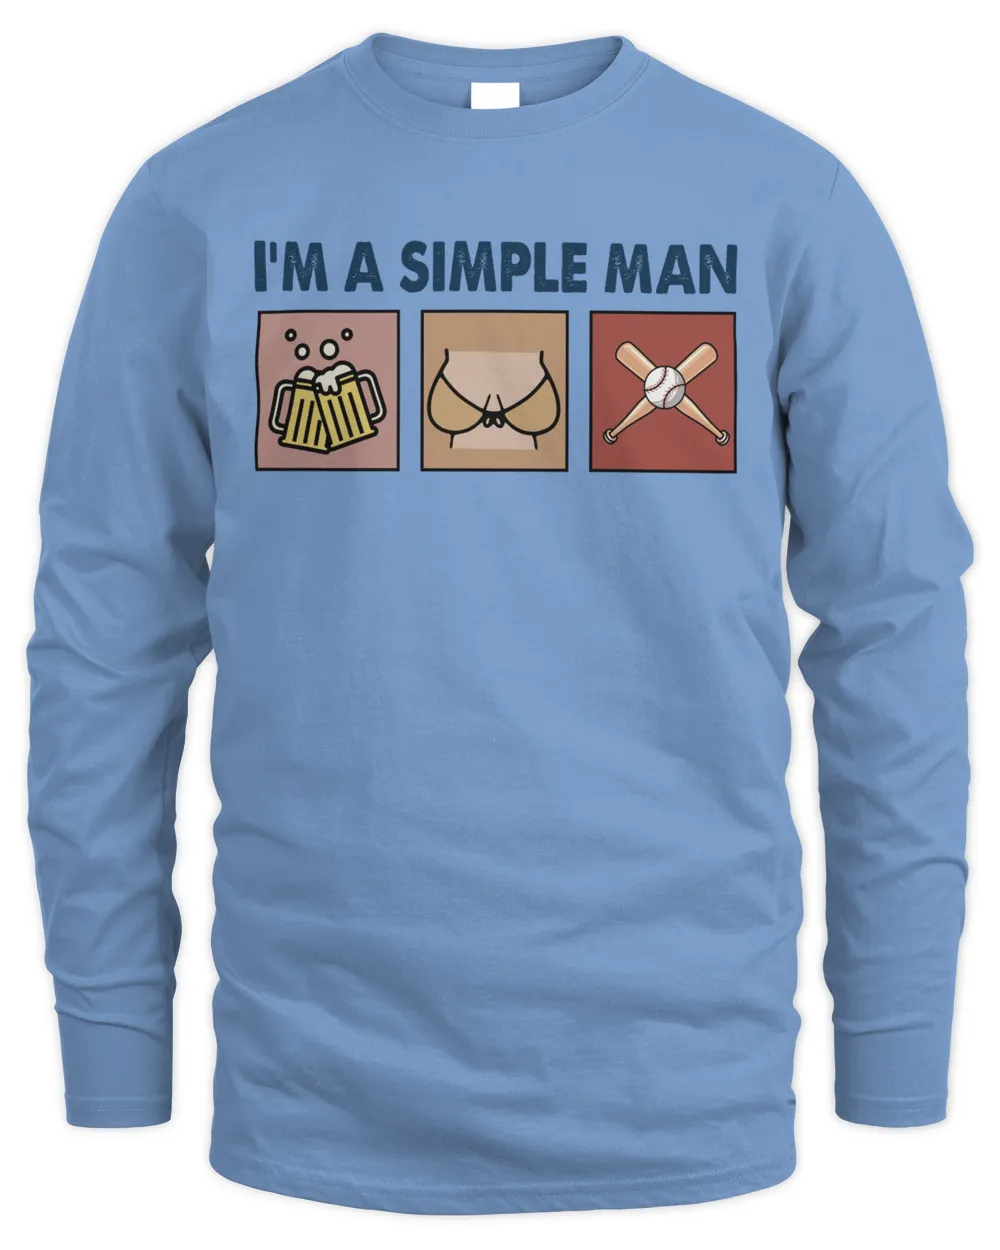 I'm simple man